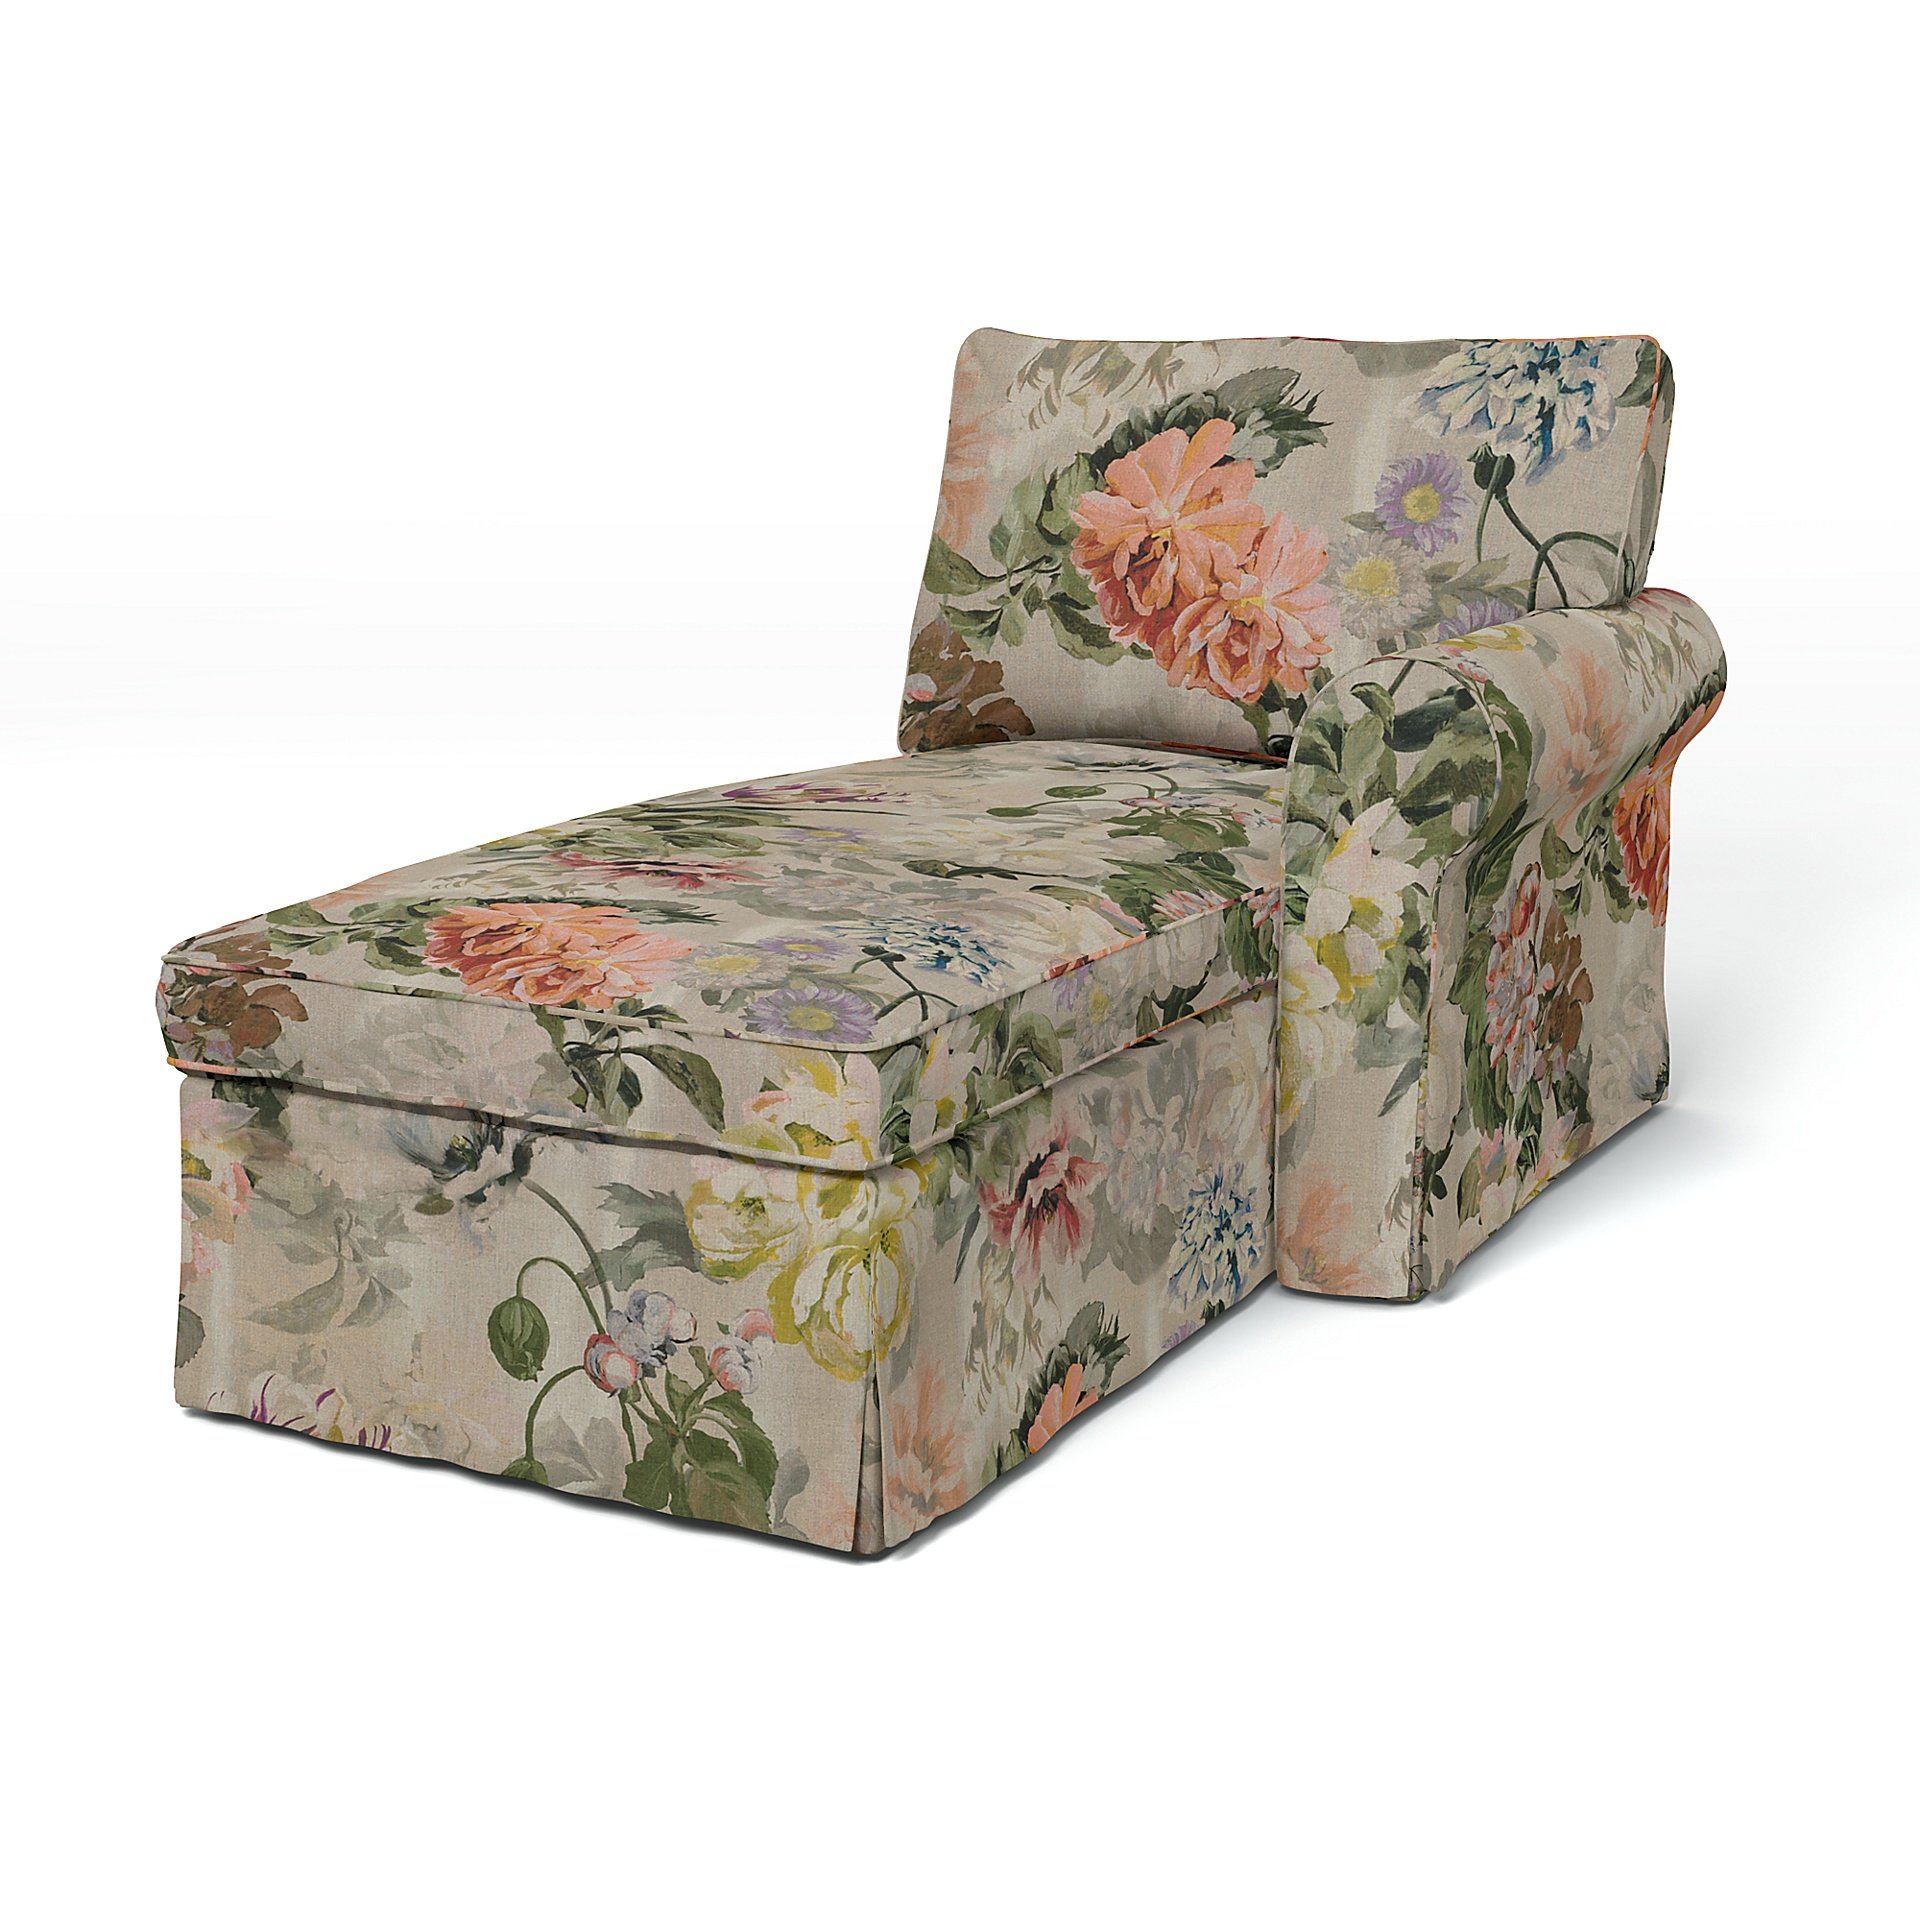 IKEA - Ektorp Chaise with Right Armrest Cover, Delft Flower - Tuberose, Linen - Bemz